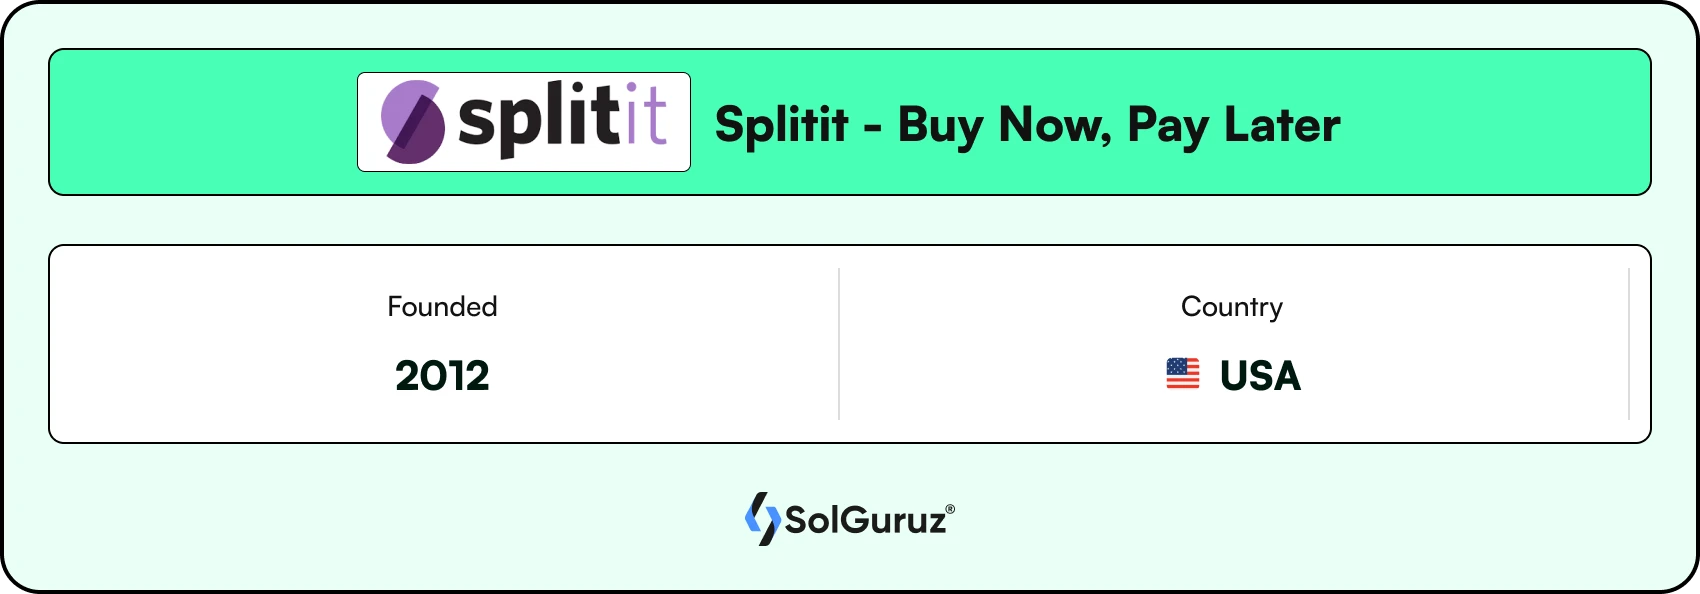 Splitit - Buy Now, Pay Later App